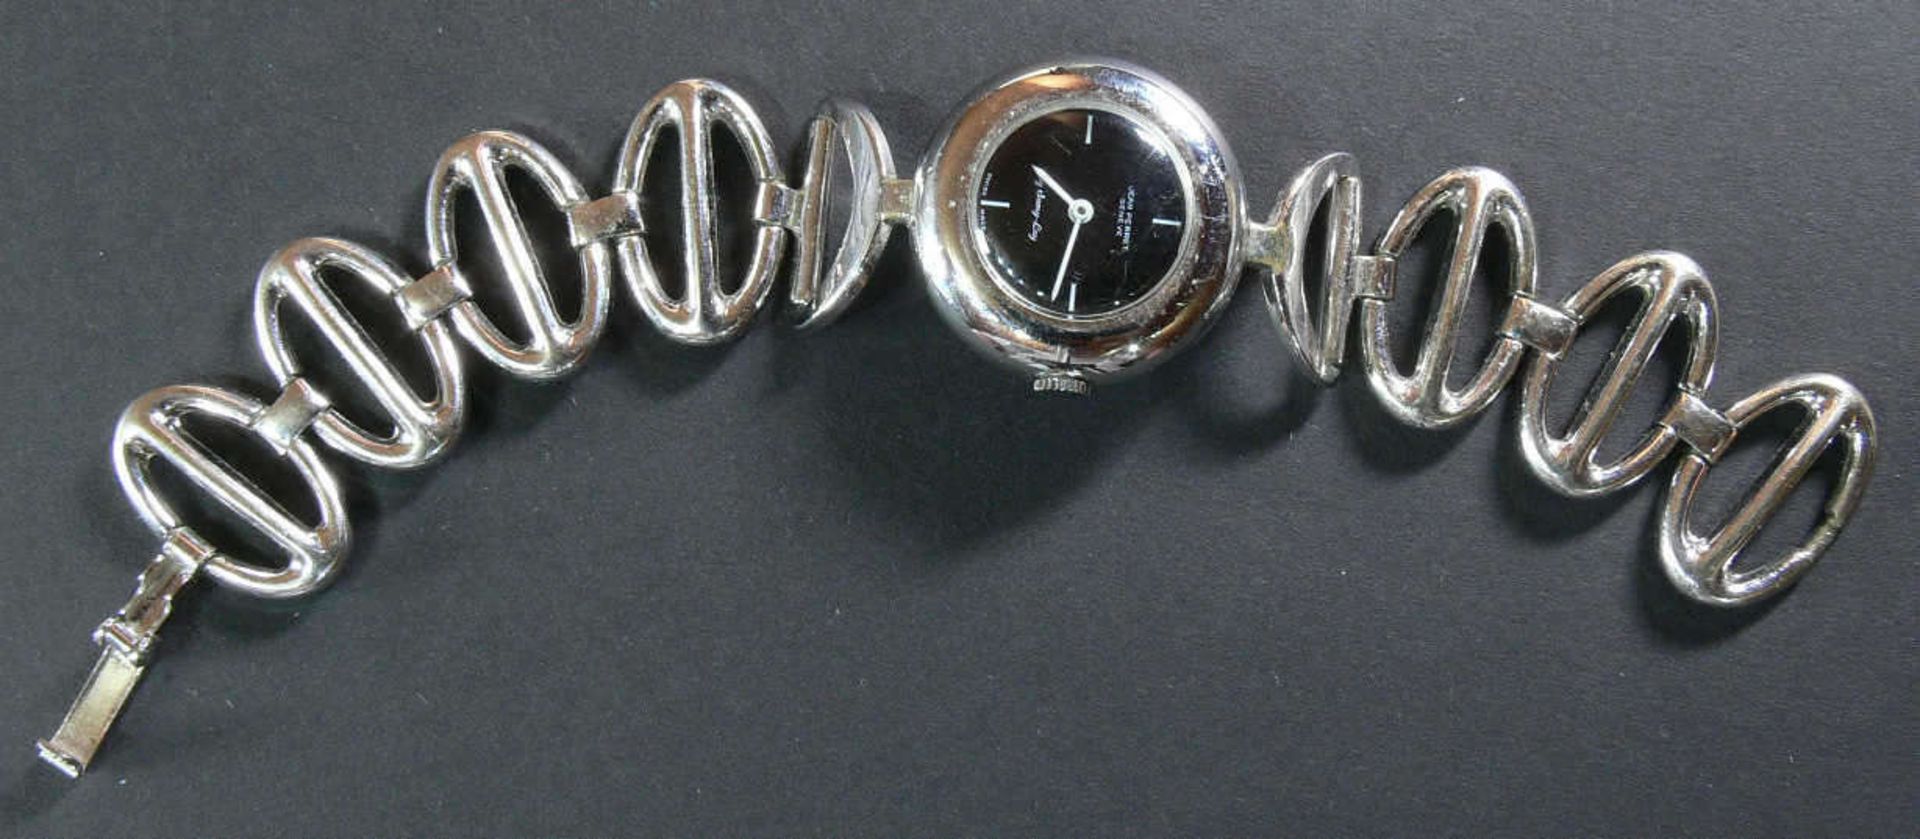 Jean Perret Damen - Armbanduhr. Metall - Armband. Die Uhr läuft an.